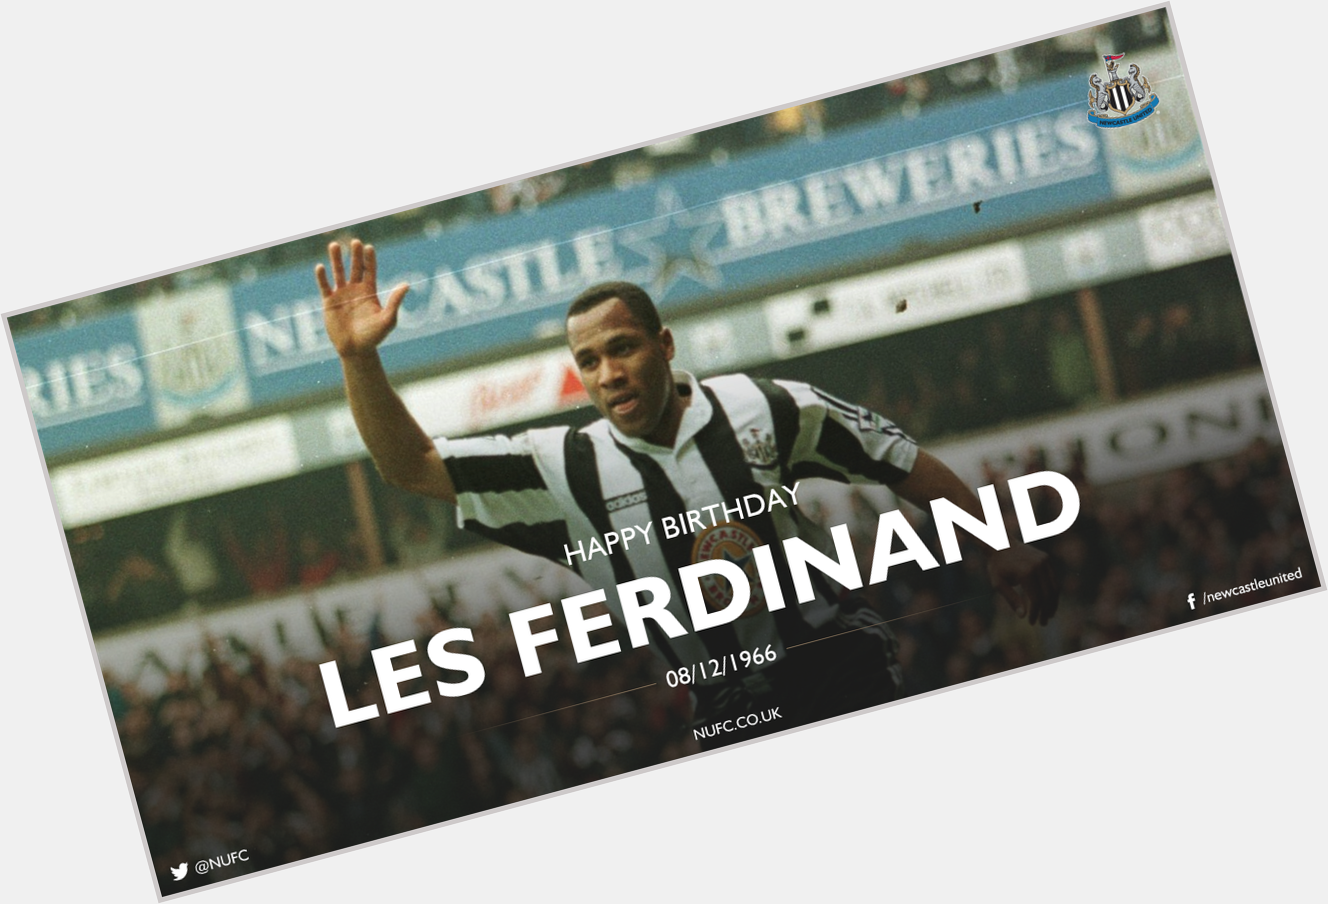 Good morning! We wish former Newcastle United striker Les Ferdinand a very happy 49th birthday! 